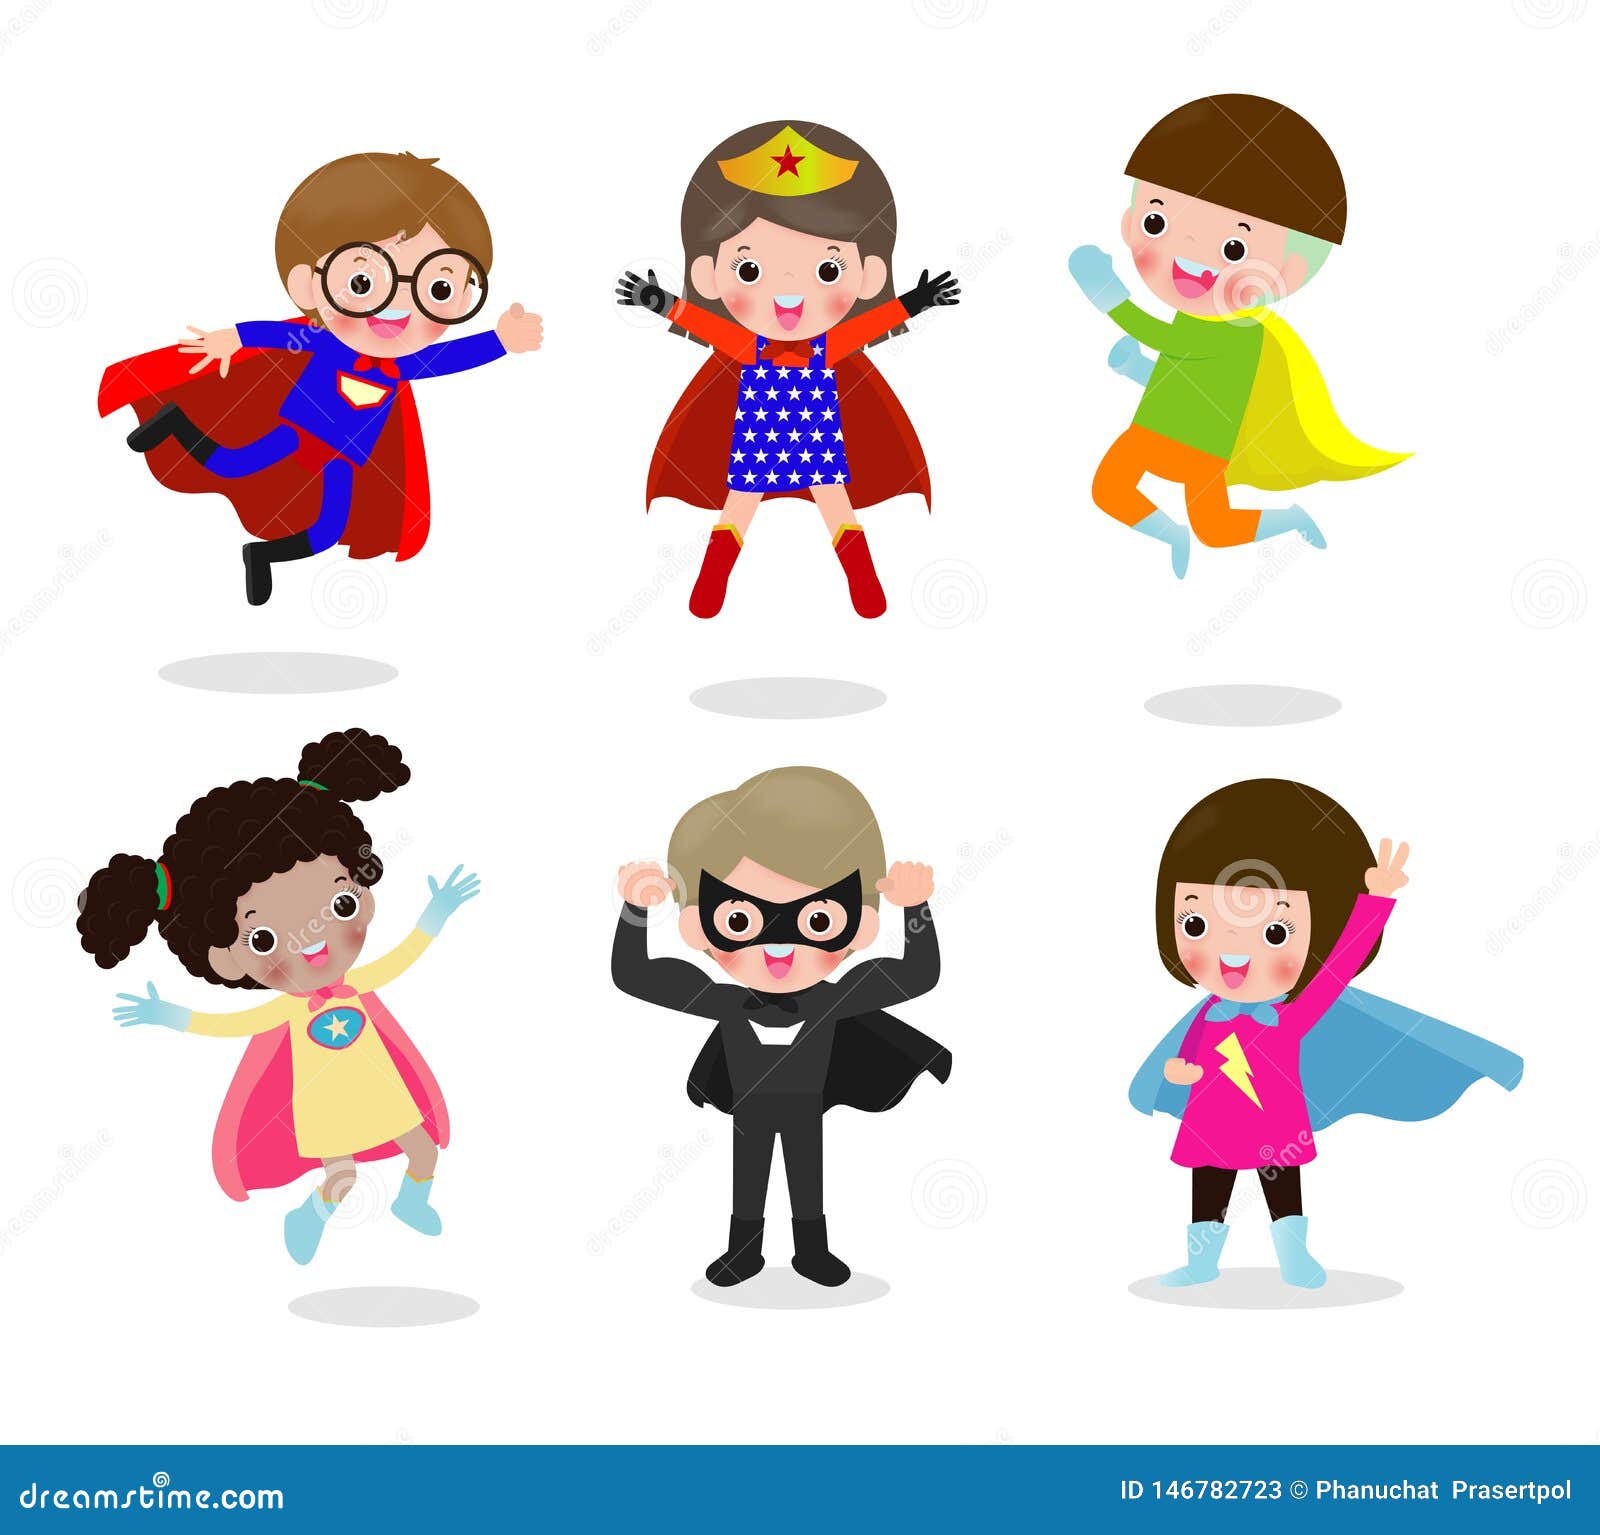 Cartoon Set of Kids Superheroes Wearing Comics Costumes, Children with ...